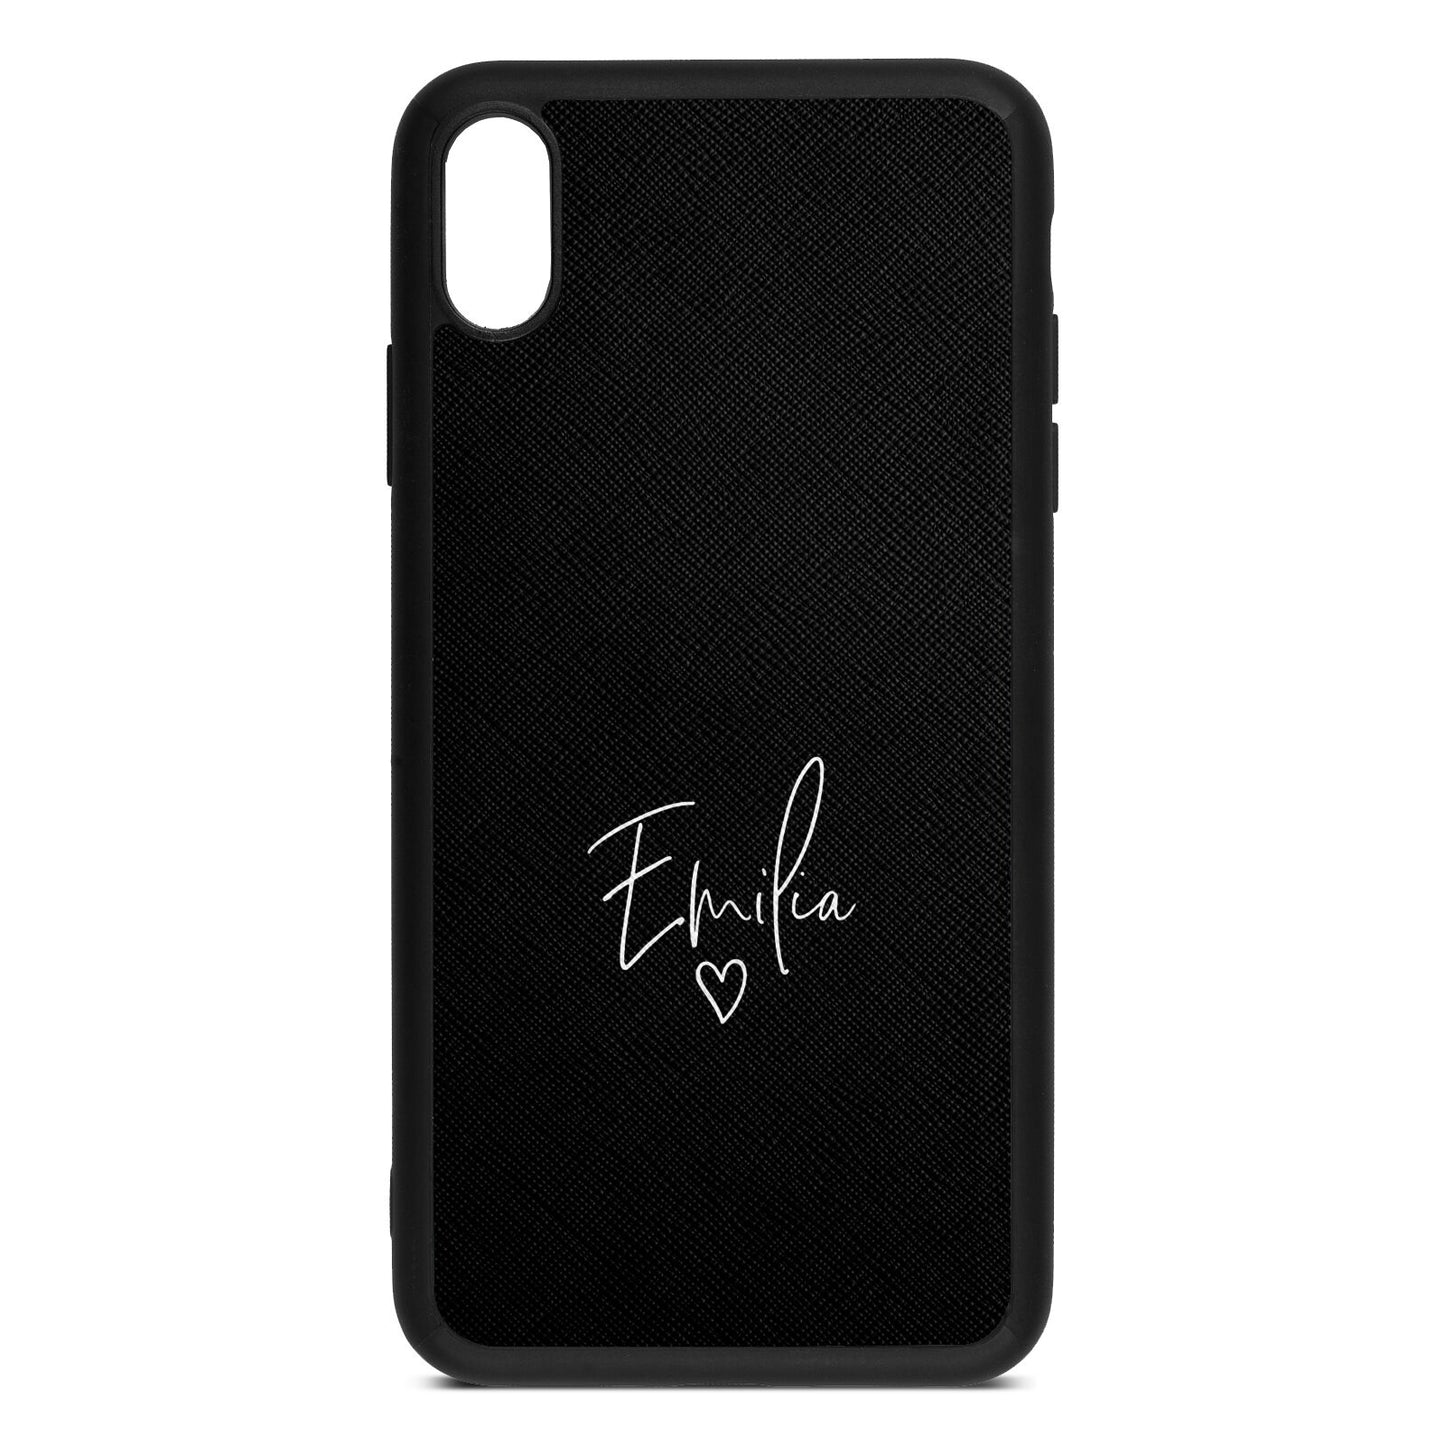 White Handwritten Name Transparent Black Saffiano Leather iPhone Xs Max Case